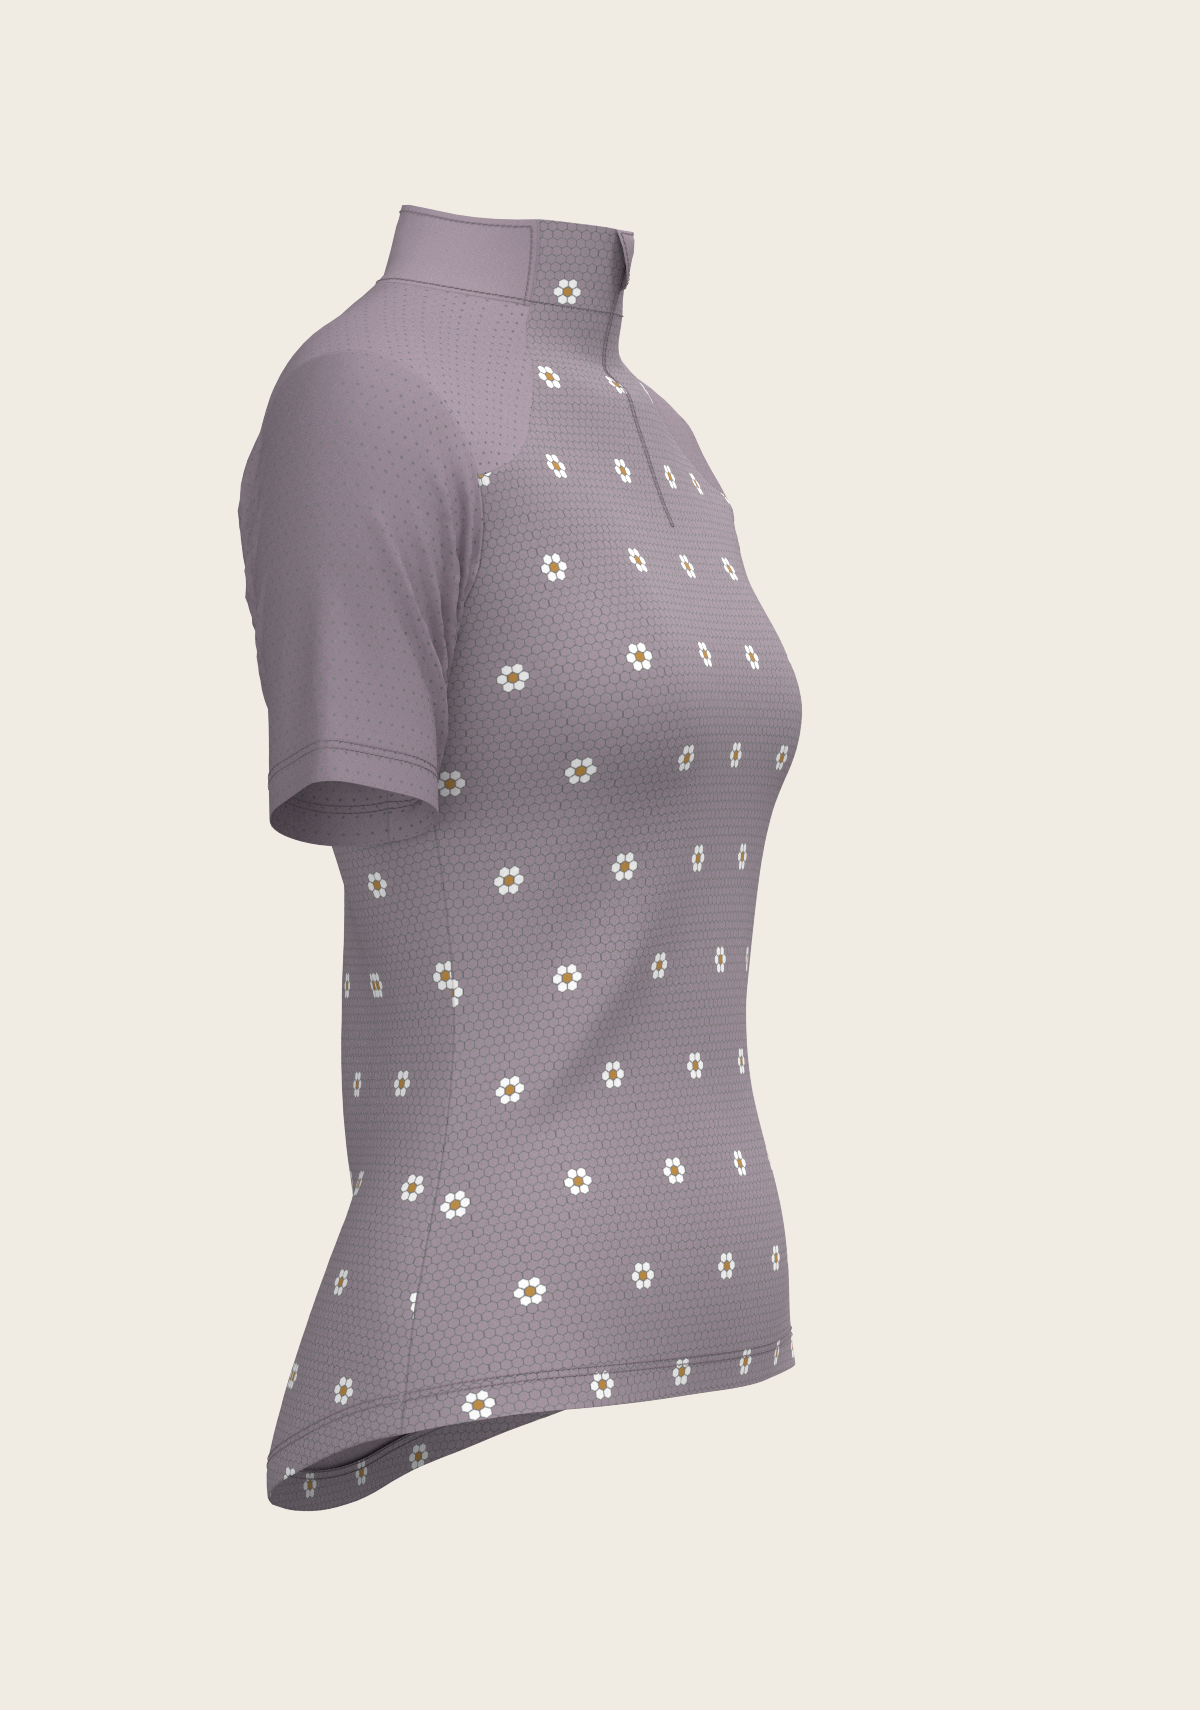 Mosaic Daises in Lavender Short Sleeve Sport Sun Shirt